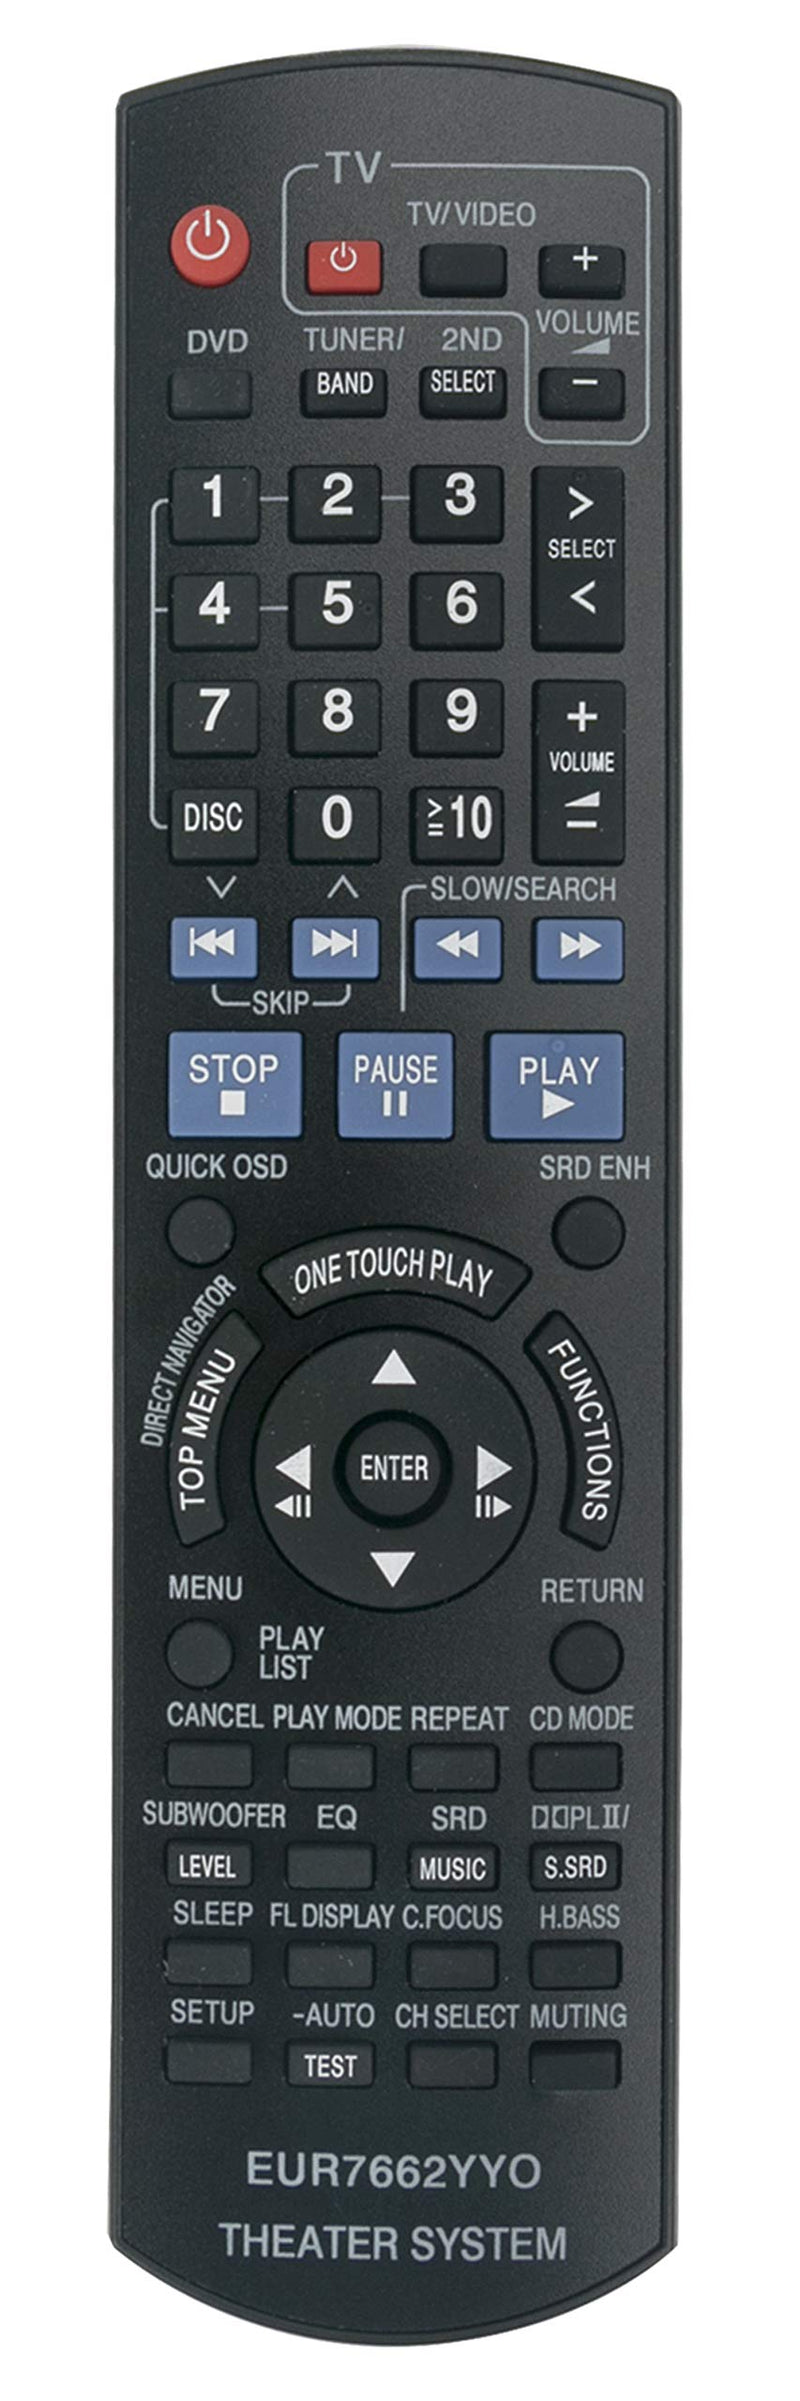 EUR7662YY0 EUR7662YYO Replaced Remote fit for Panasonic DVD Home Theater Sound System SA-PT950P SA-PT950PC SC-PT950 SC-PT1050 SA-PT950 SA-PT1050 SB-HF950 SB-HF1050 SB-HC950 SB-HS950 SB-HS1050 SB-HW950